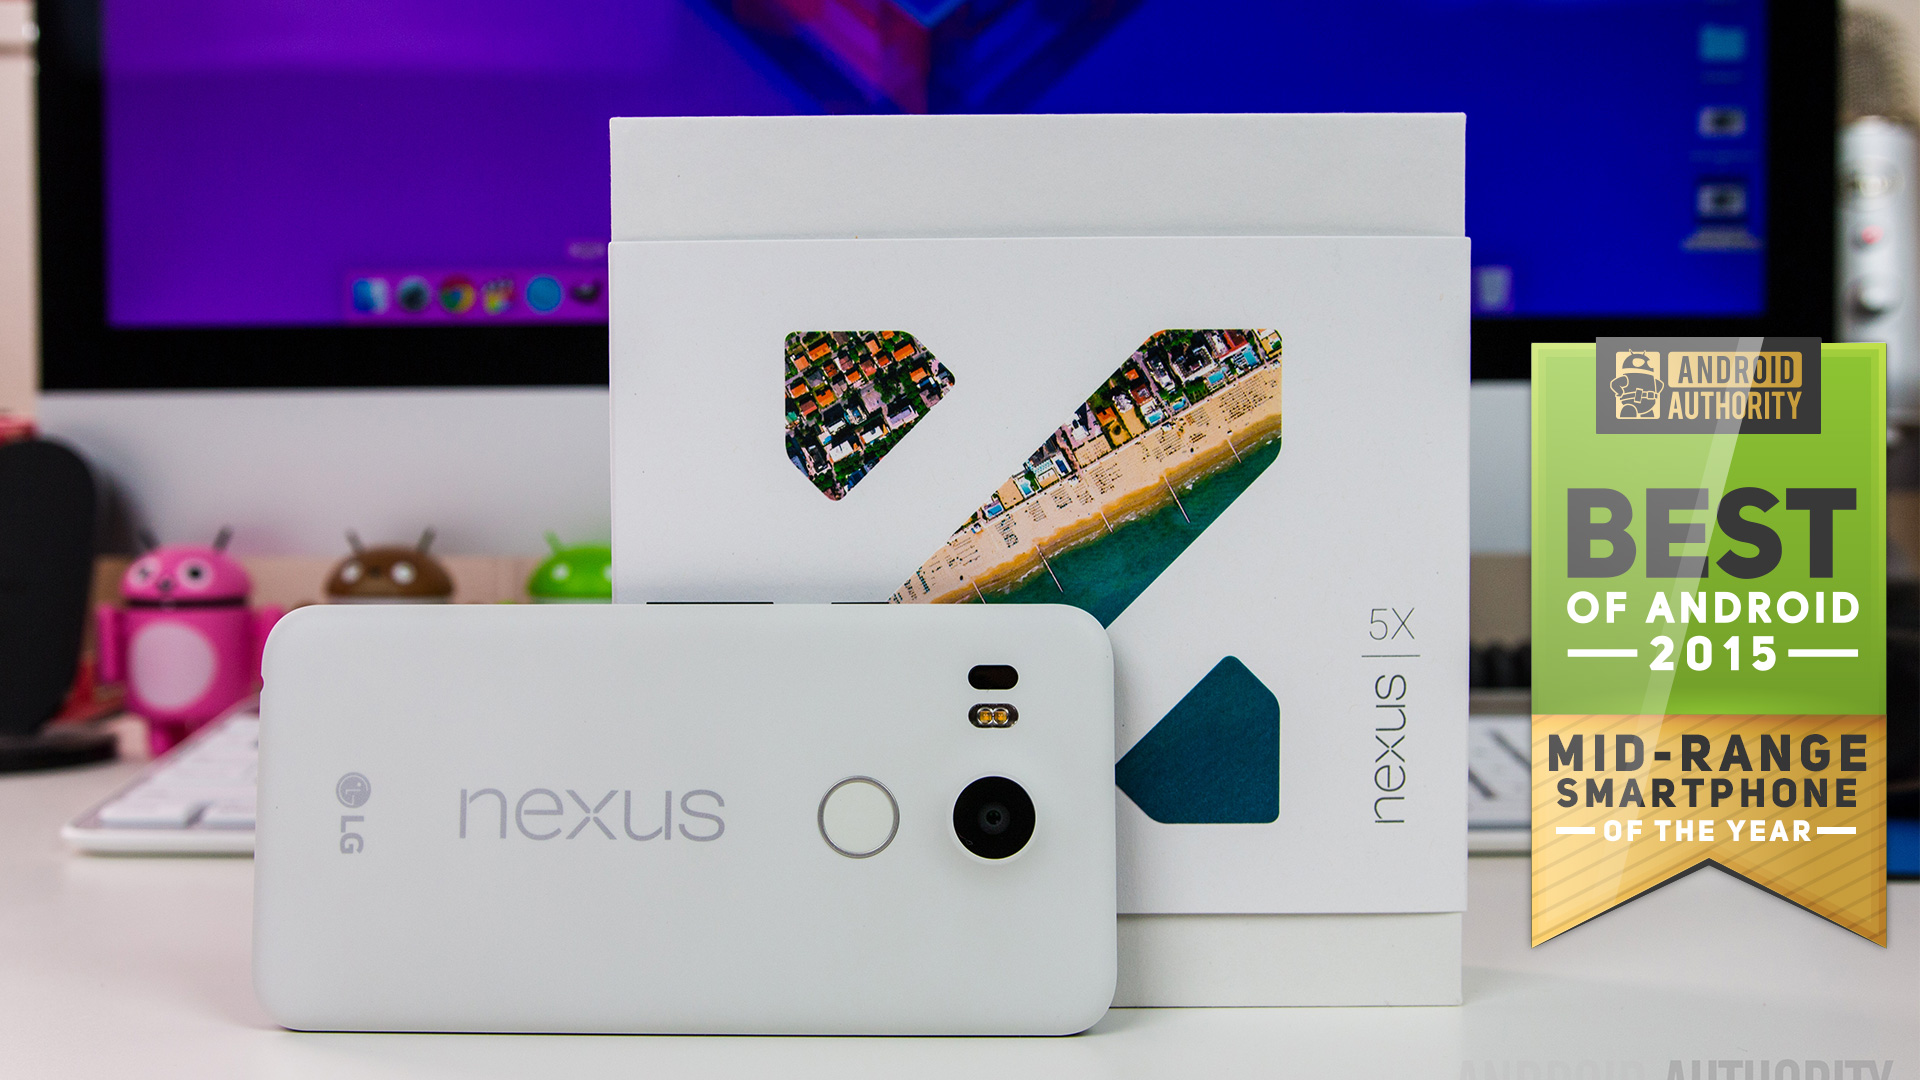 mid-range smartphone of the year 2015 - lg nexus 5x